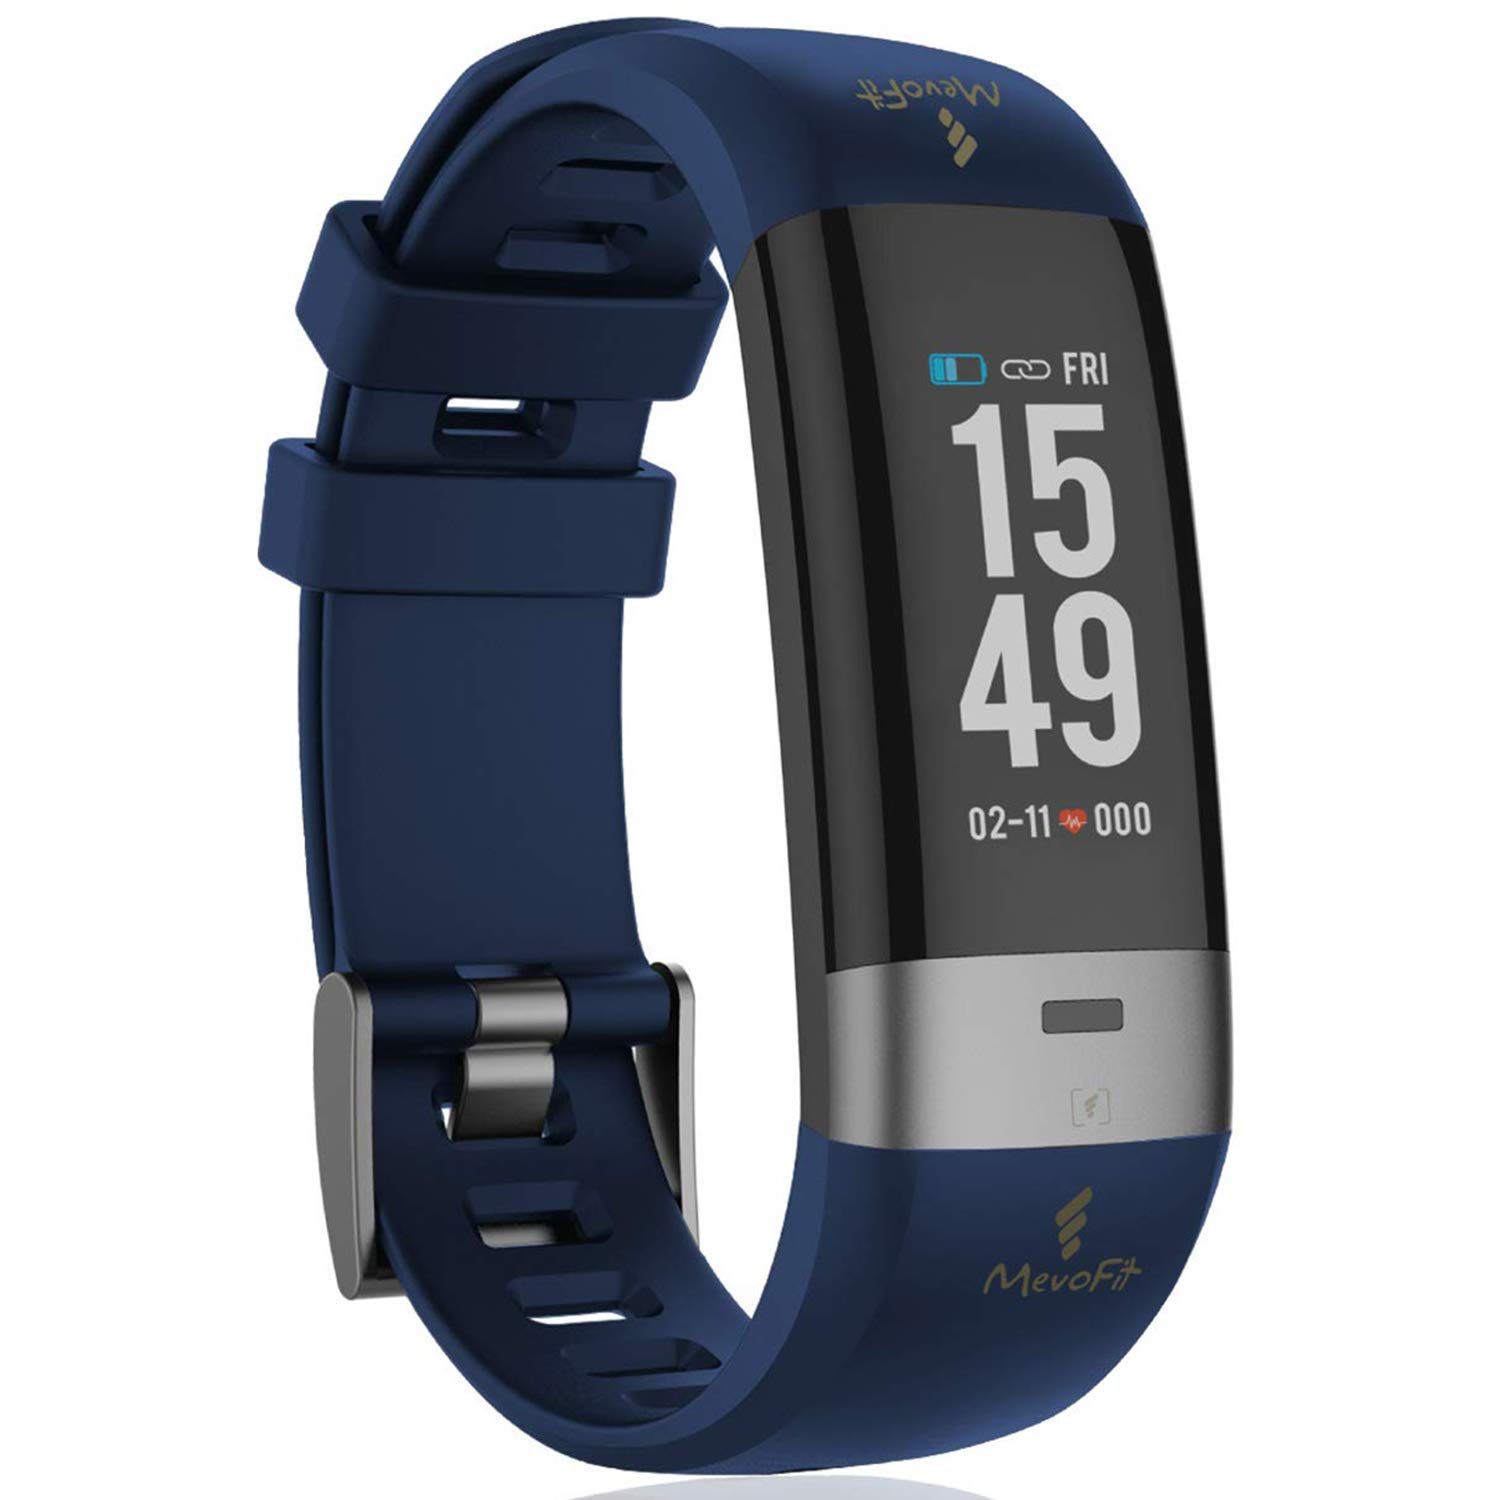 MevoFit Care Smartwatch: Fitness Smartwatch an Activity Tracker for Men and Women [Blue]